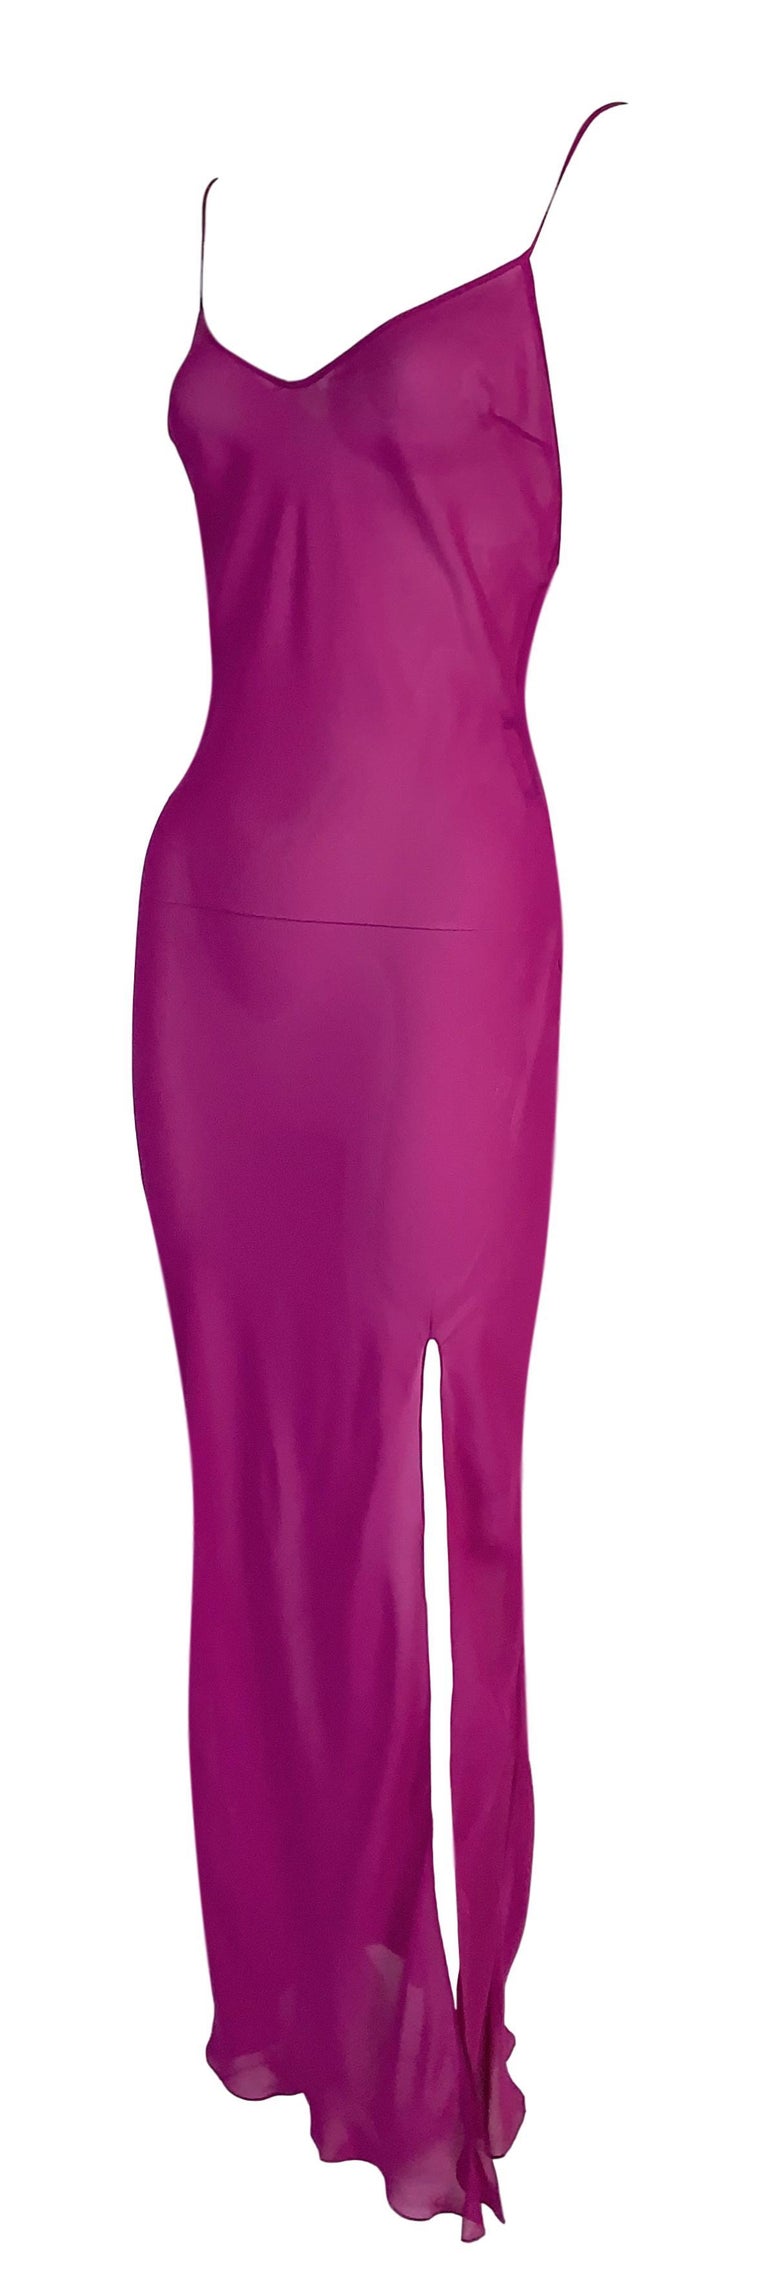 S/S 2004 Christian Dior Sheer Magenta Hot Pink Silk Plunging Slip Dress ...